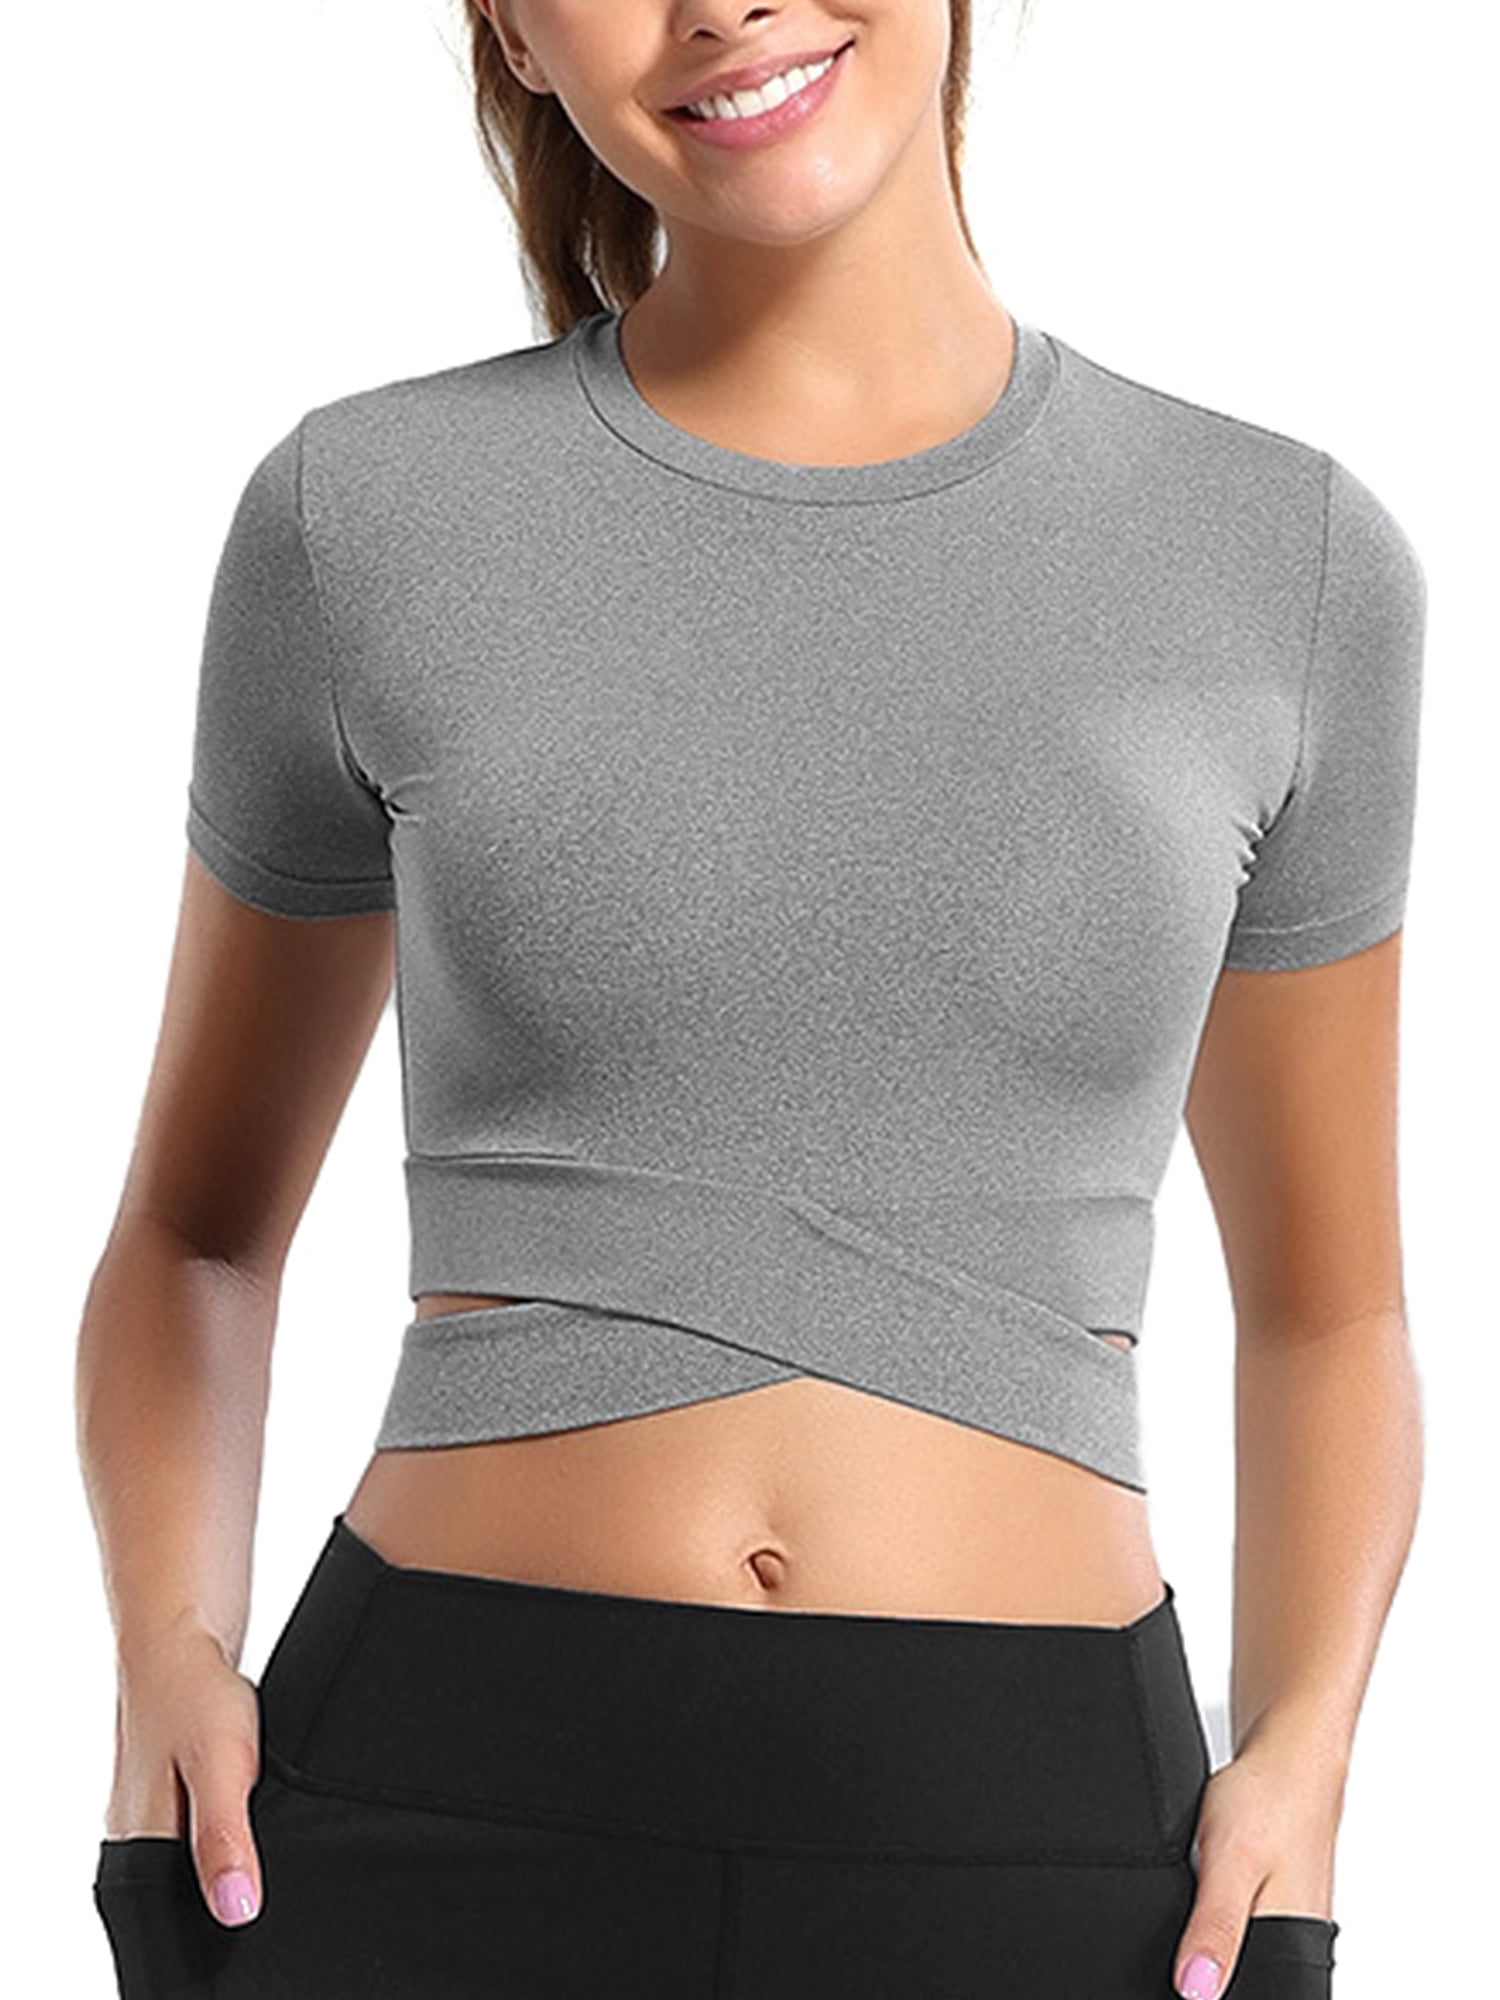 Tummy Cross Sports Shirts for Women Moisture Wicking Short Sleeve